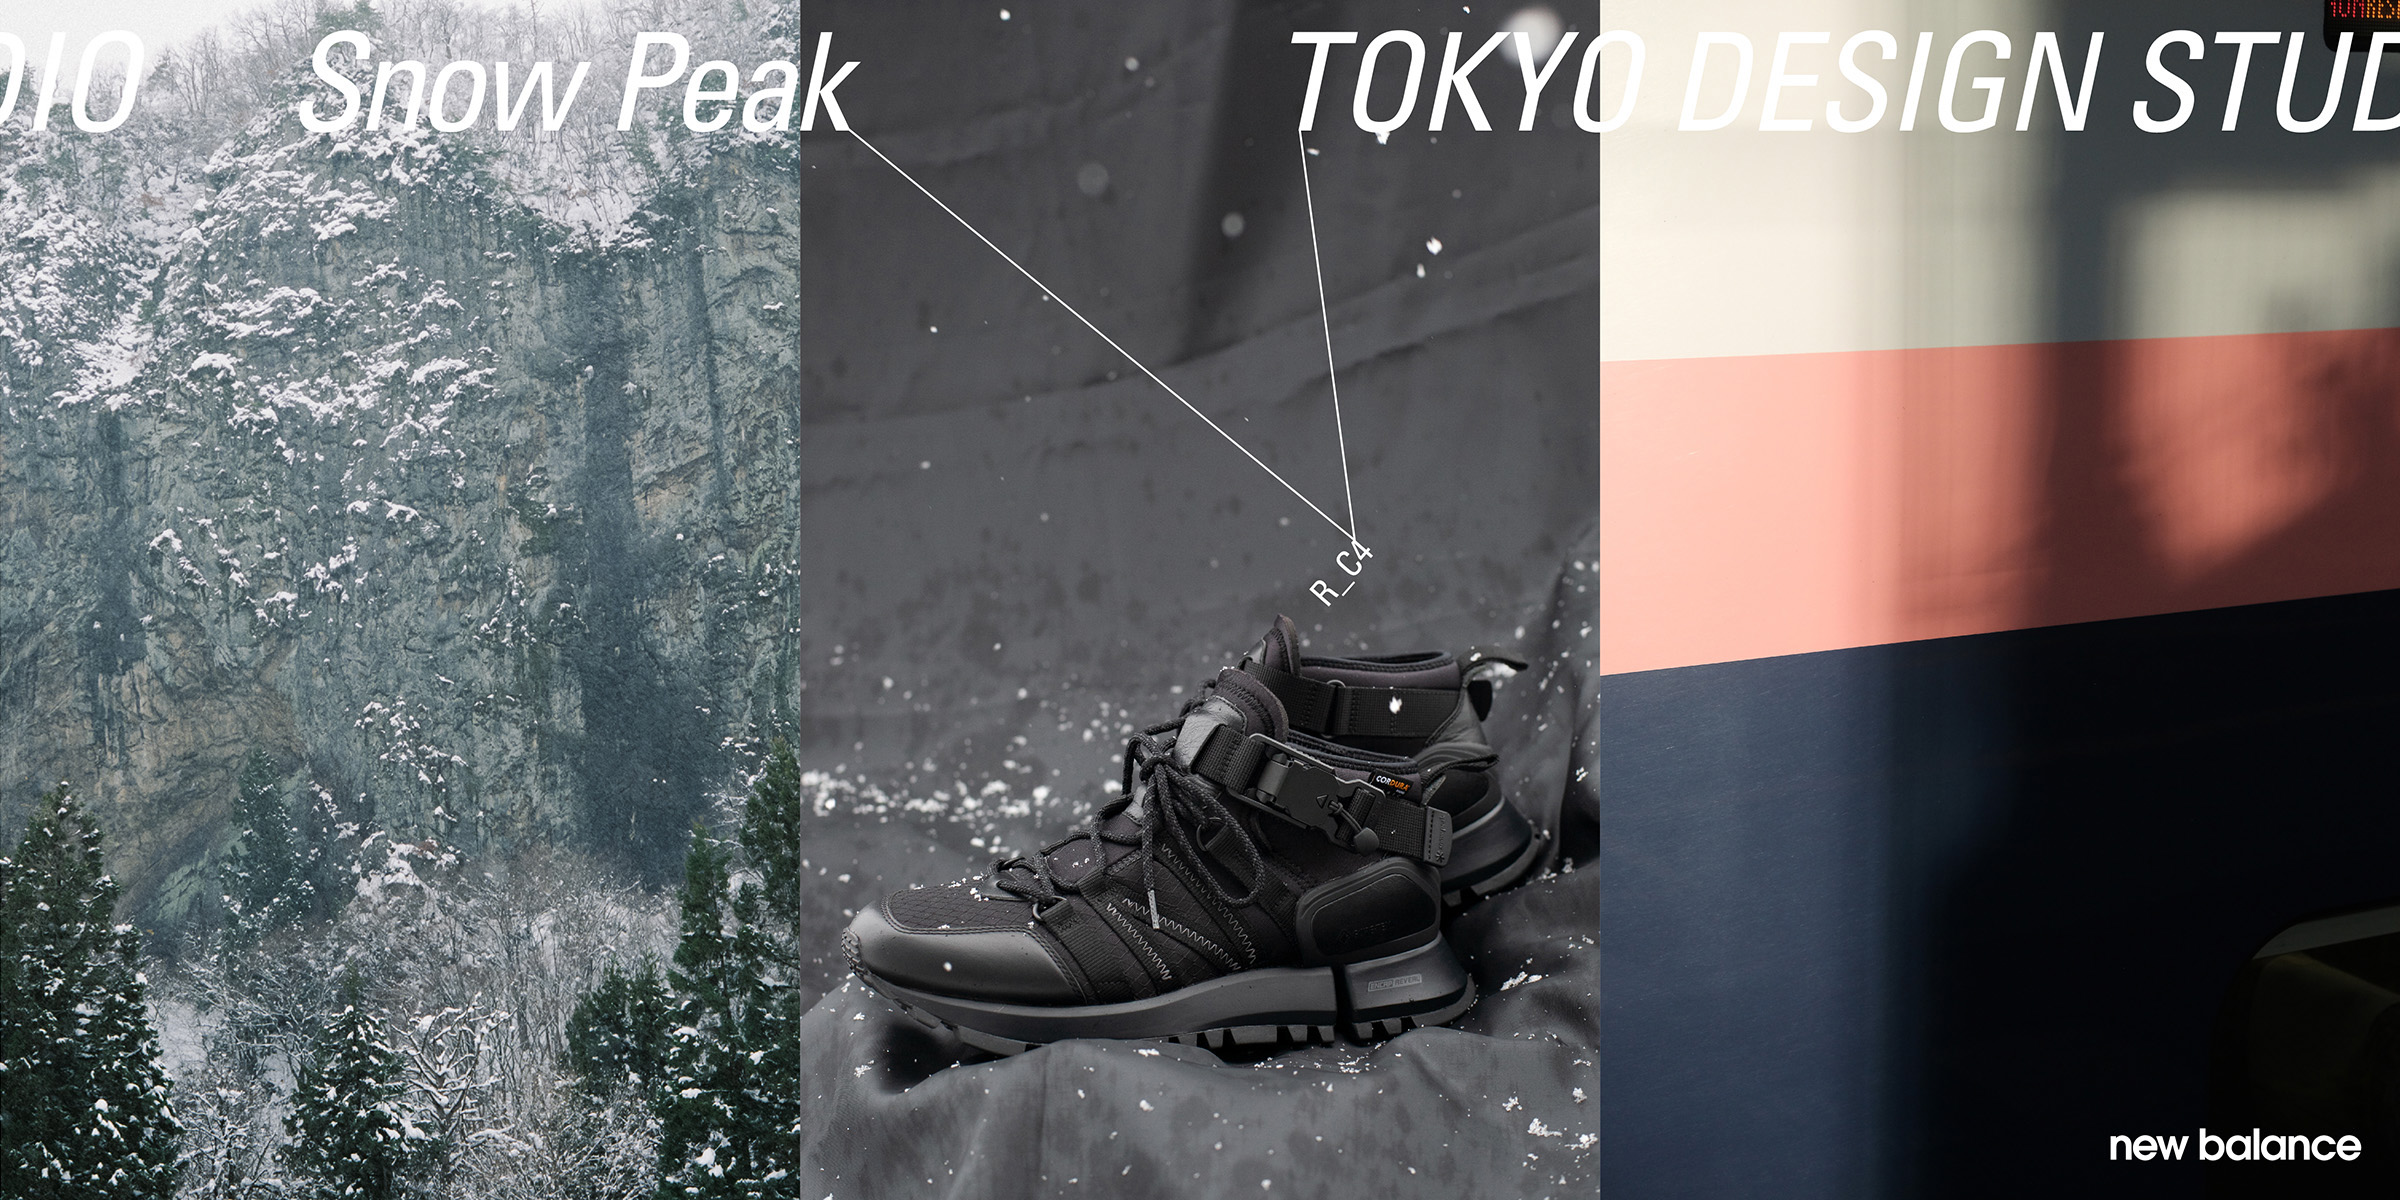 Snow Peak x TOKYO DESIGN STUDIO New Balance 